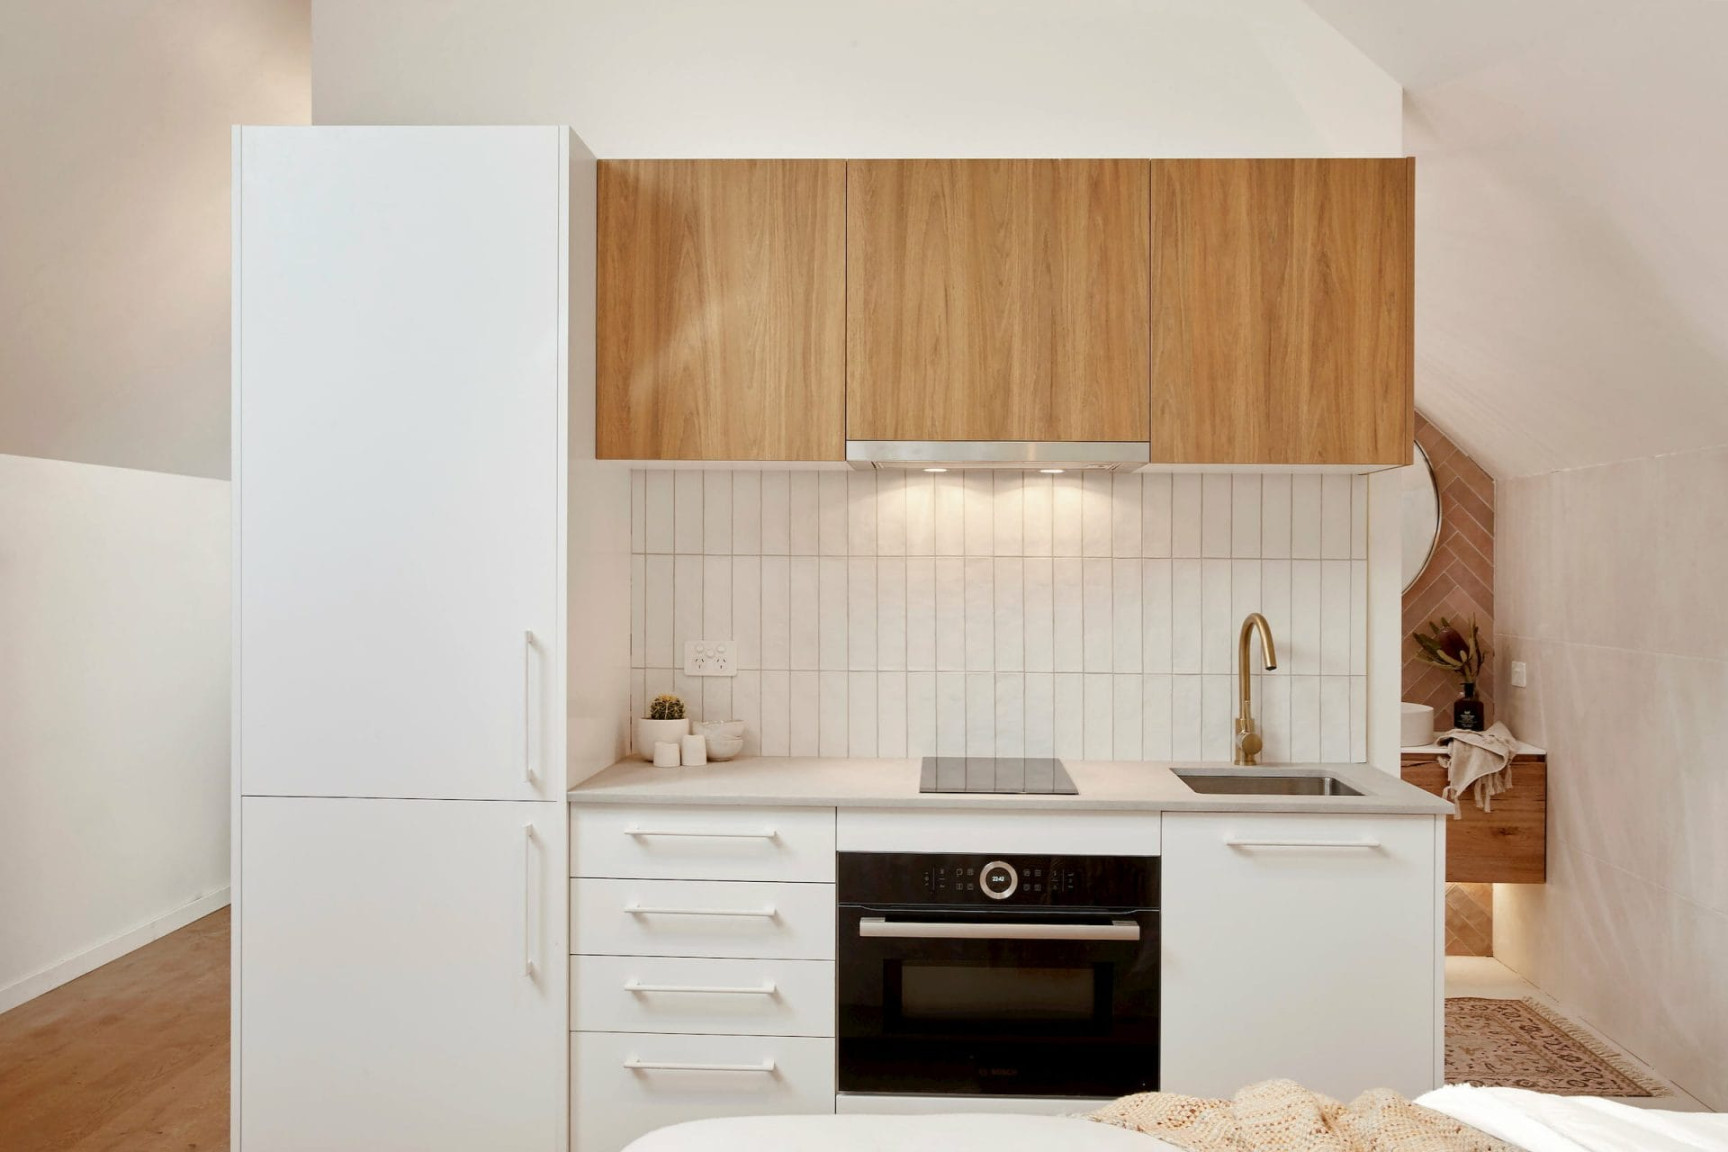 Kitchenette Ideas For Small Spaces  Caesarstone Australia